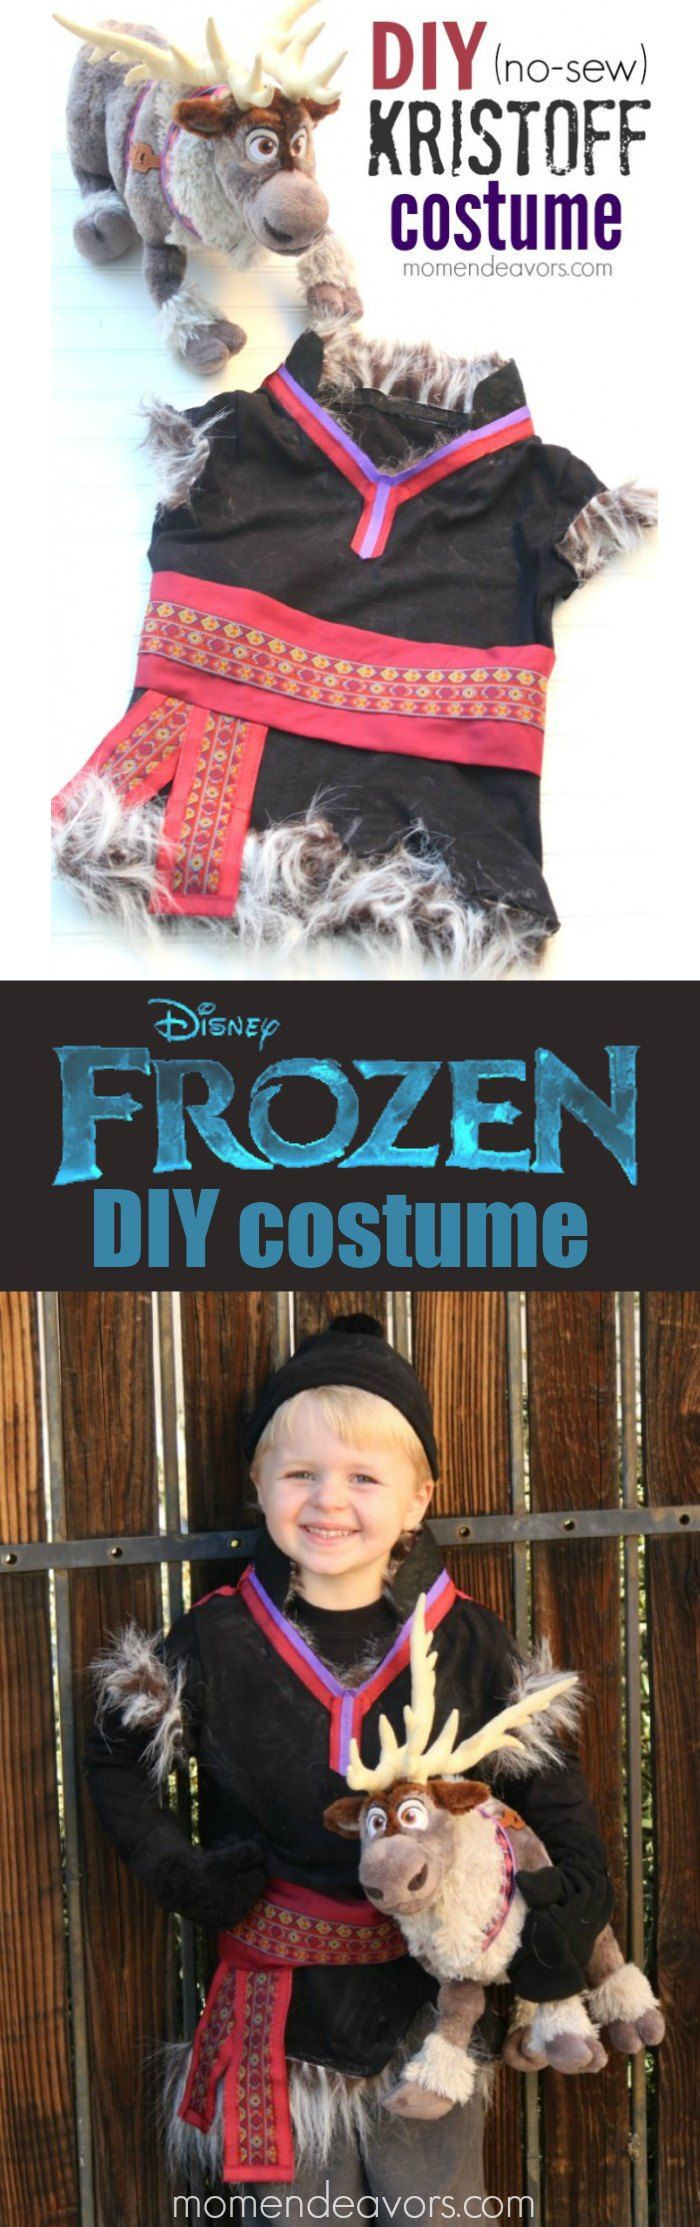 DIY Kristoff Costume
 Best 20 Frozen halloween costumes ideas on Pinterest